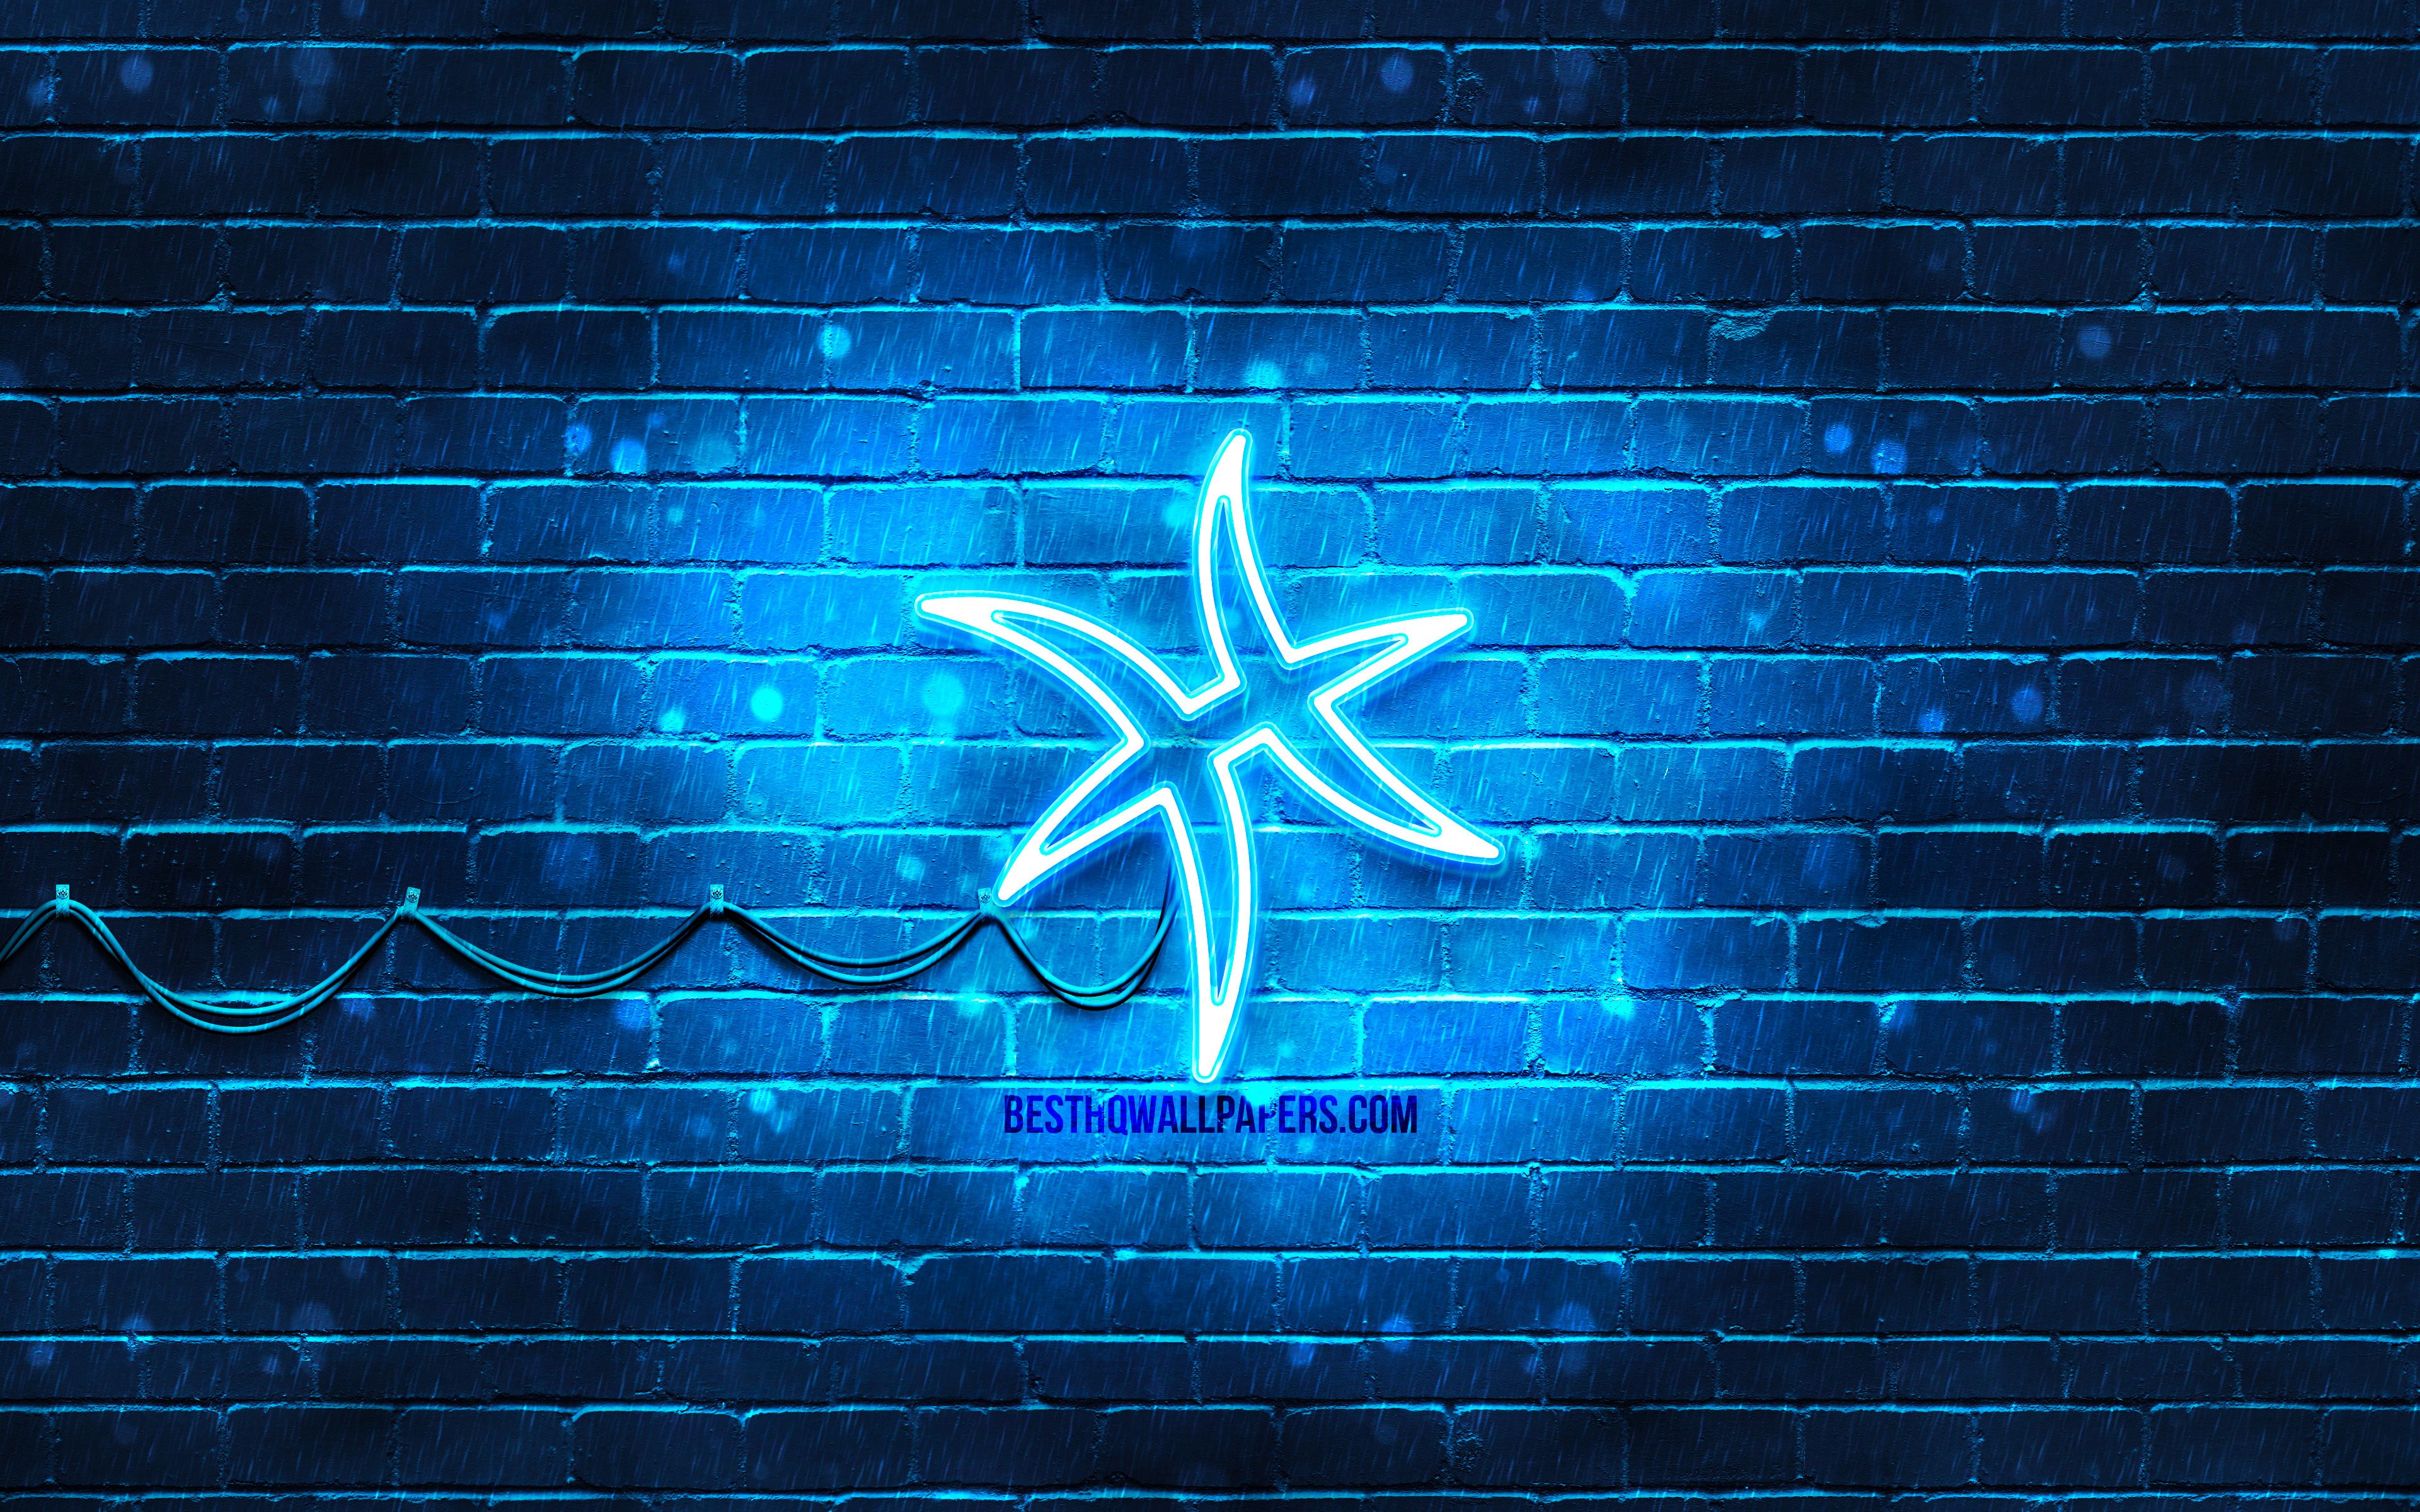 Download wallpaper Pisces neon sign, 4k, blue brickwall, creative art, zodiac signs, Pisces zodiac symbol, Pisces zodiac sign, astrology, Pisces Horoscope sign, astrological sign, zodiac neon signs, Pisces for desktop with resolution